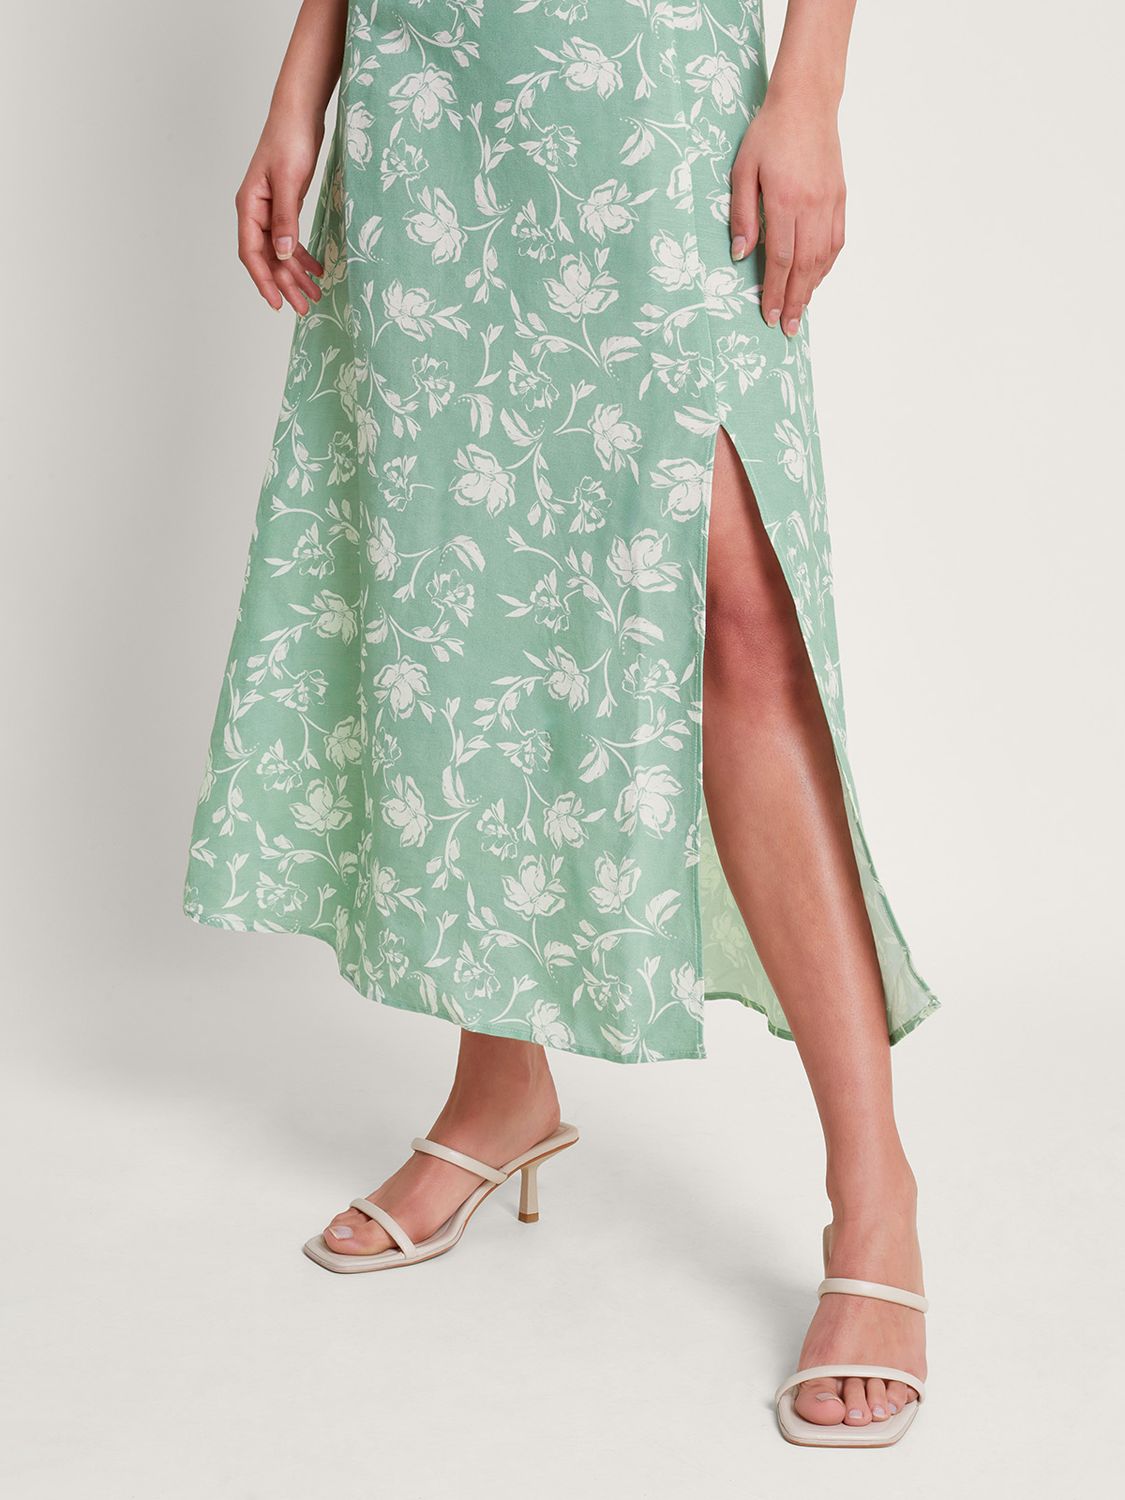 Monsoon Saskia Ruffle Trim Leaf Print Linen Blend Midaxi Dress, Green/White, 8